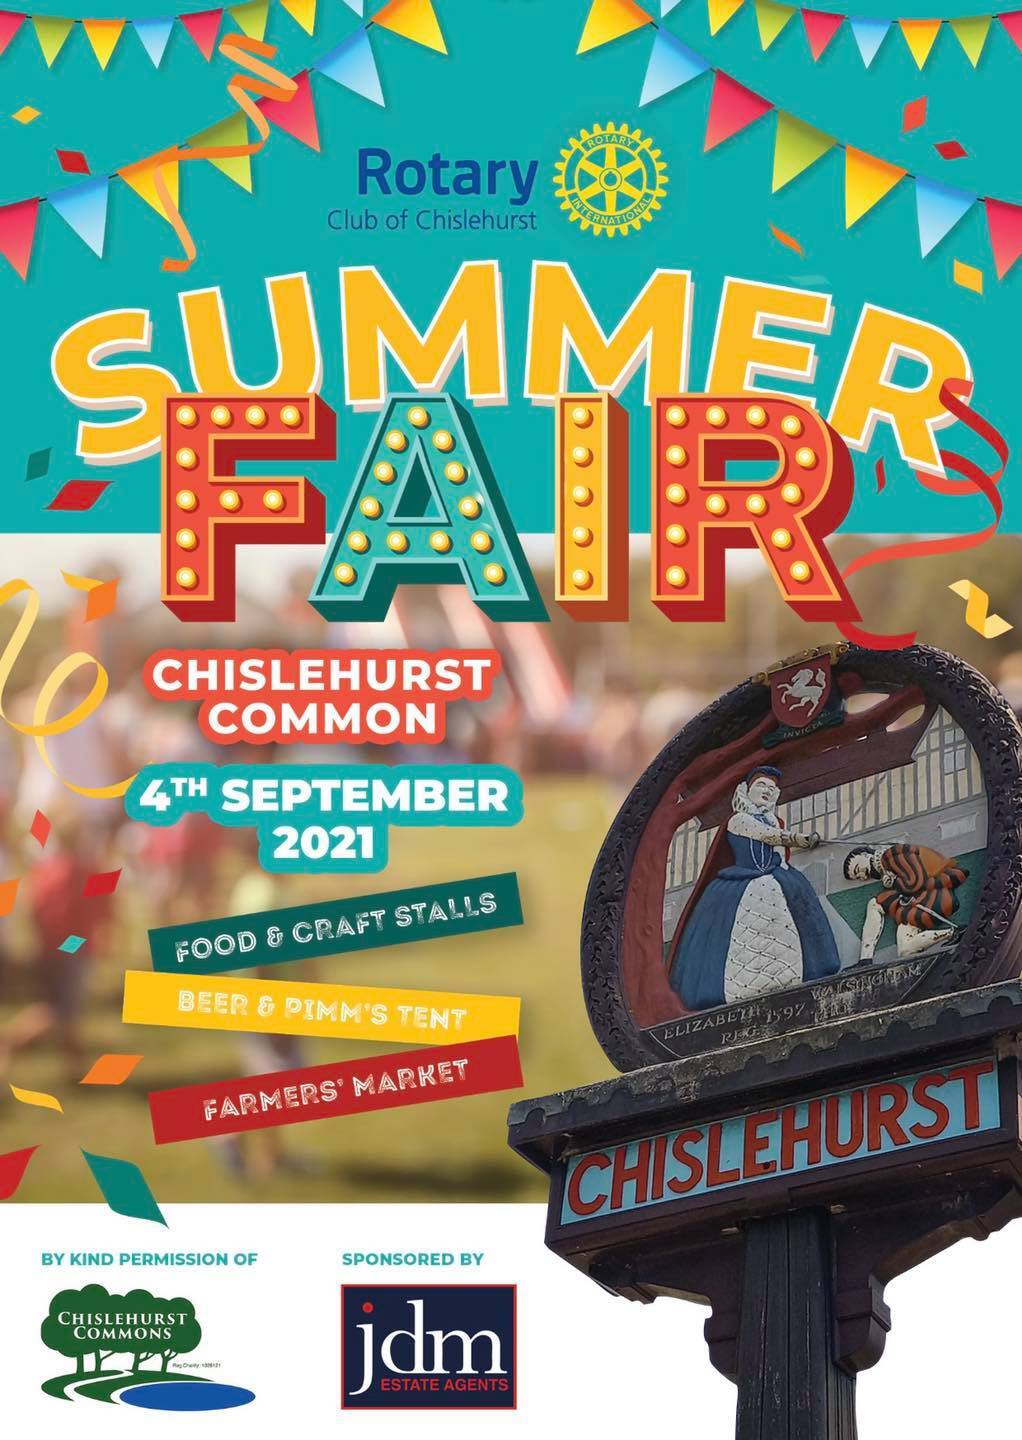 Chilsehurst Rotary Summer Fair flyer image